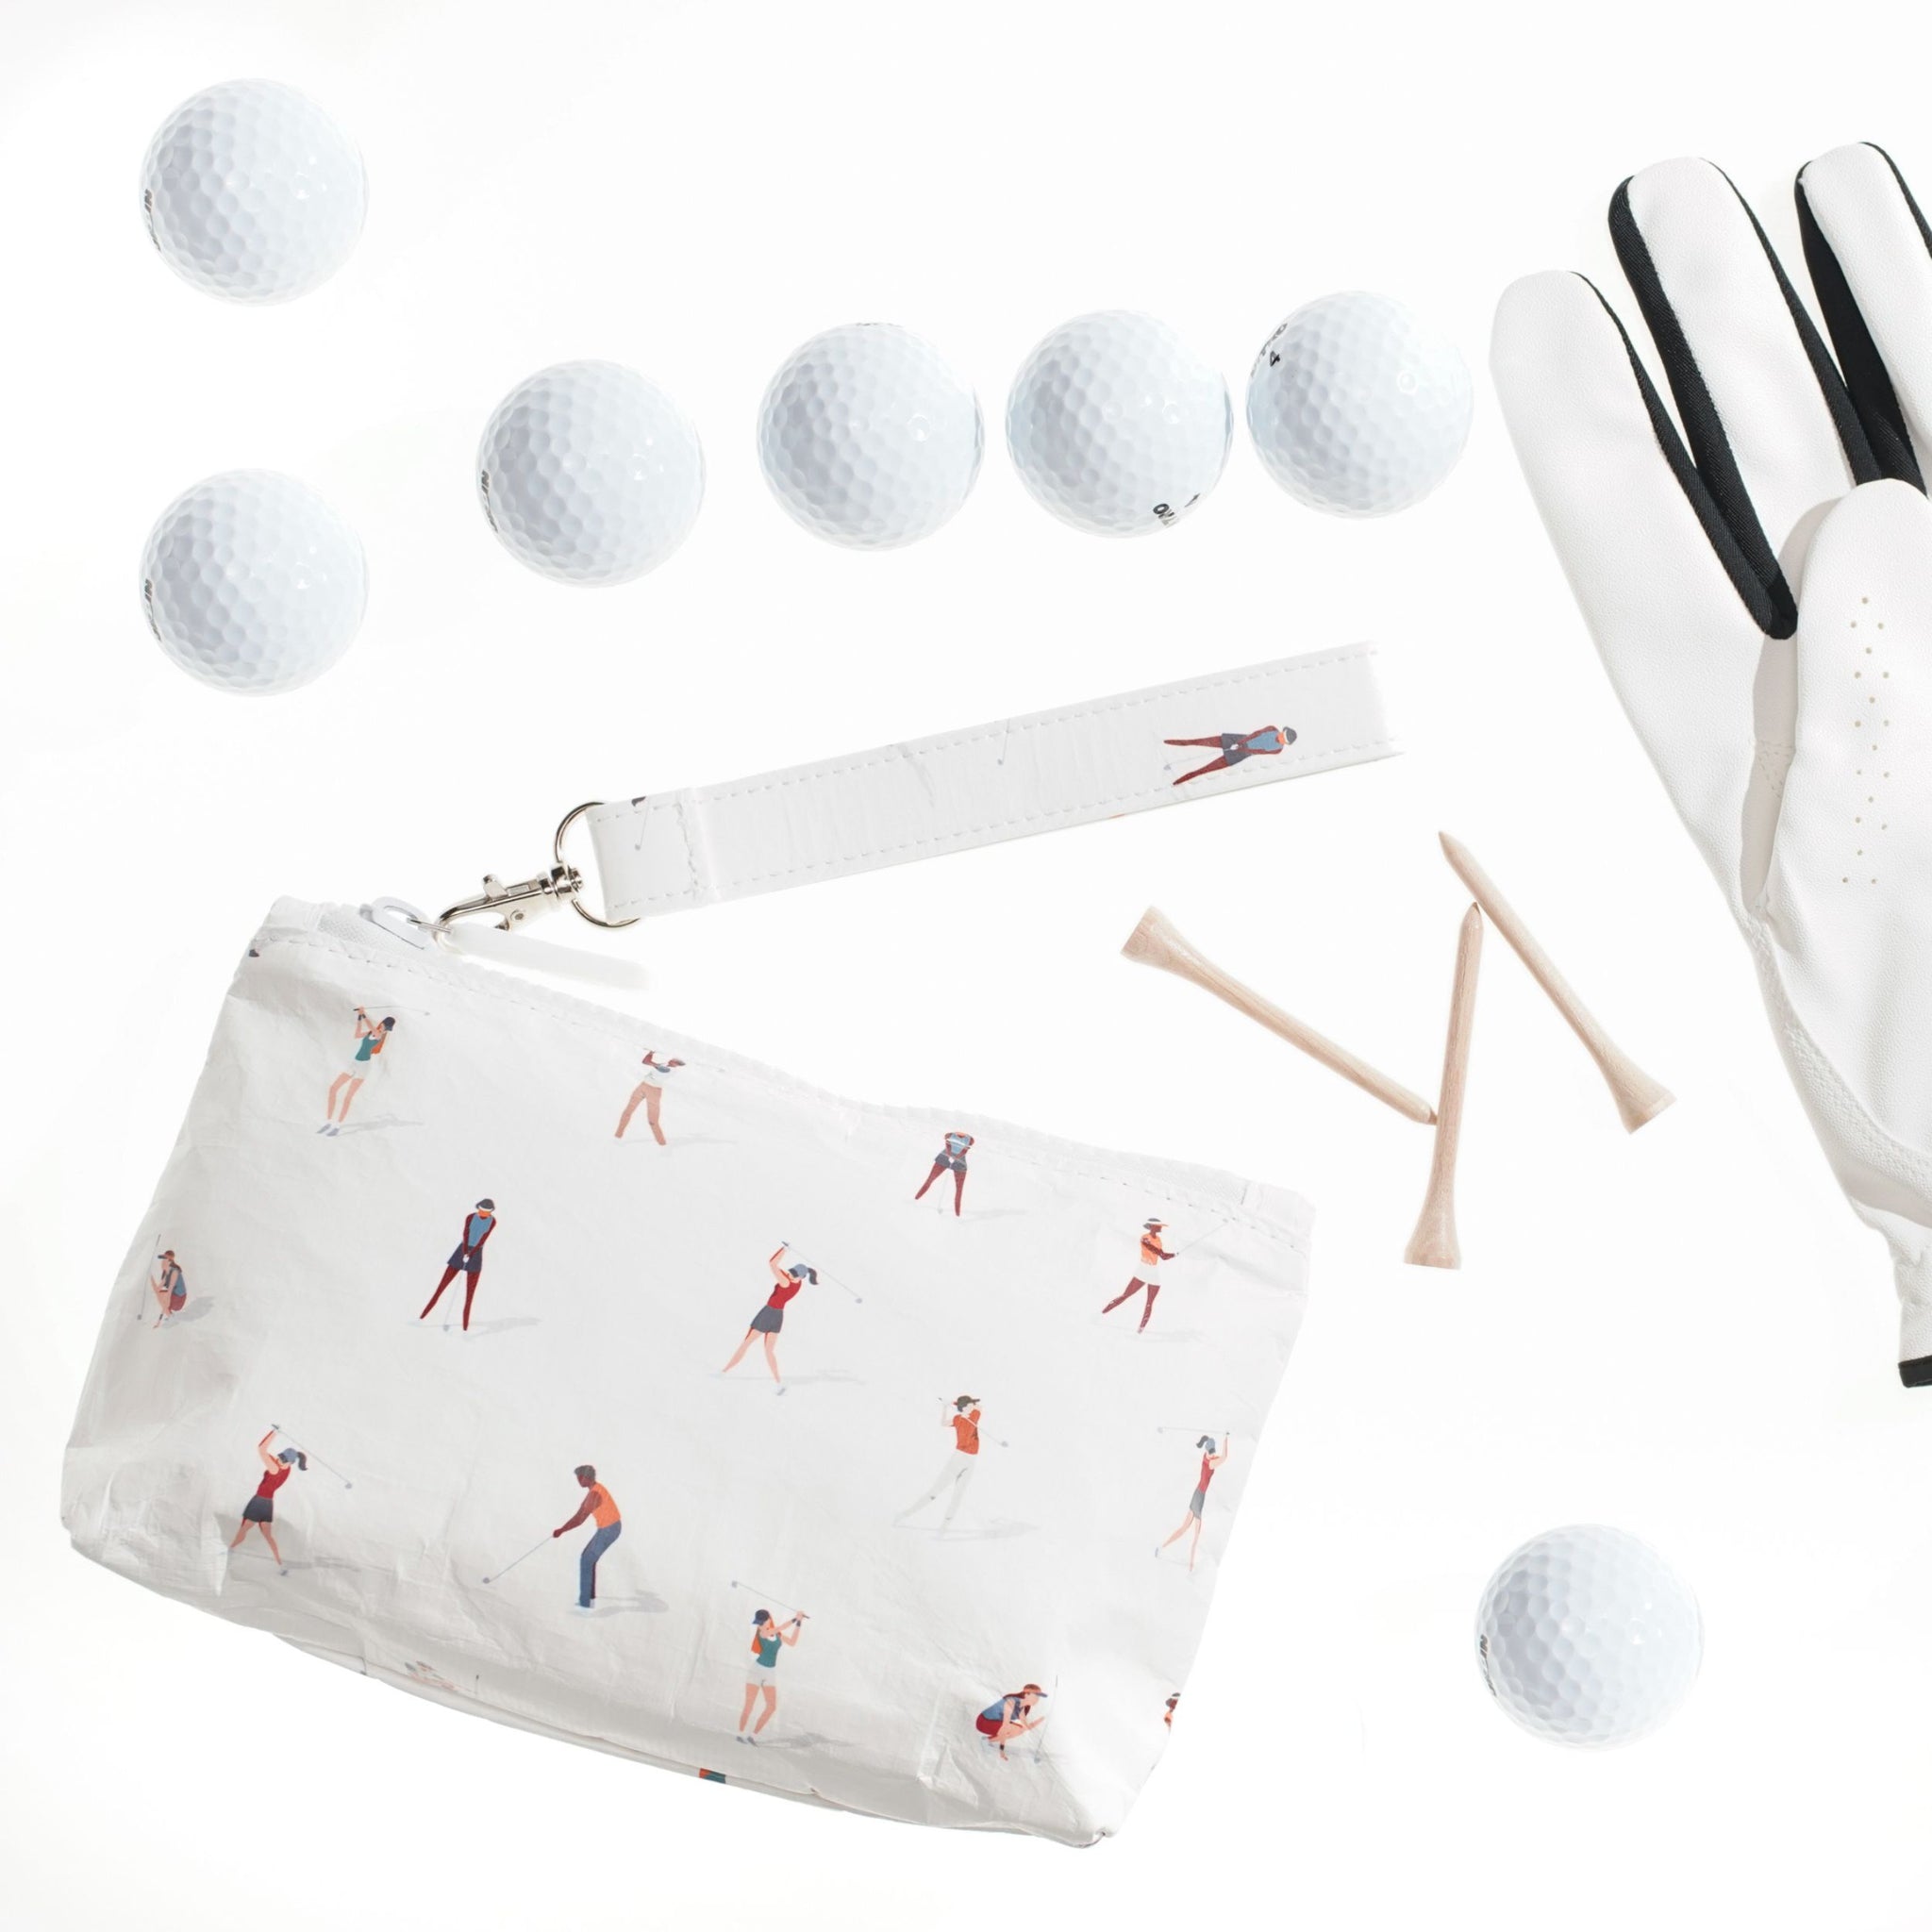 wristlet to organize golf accessories